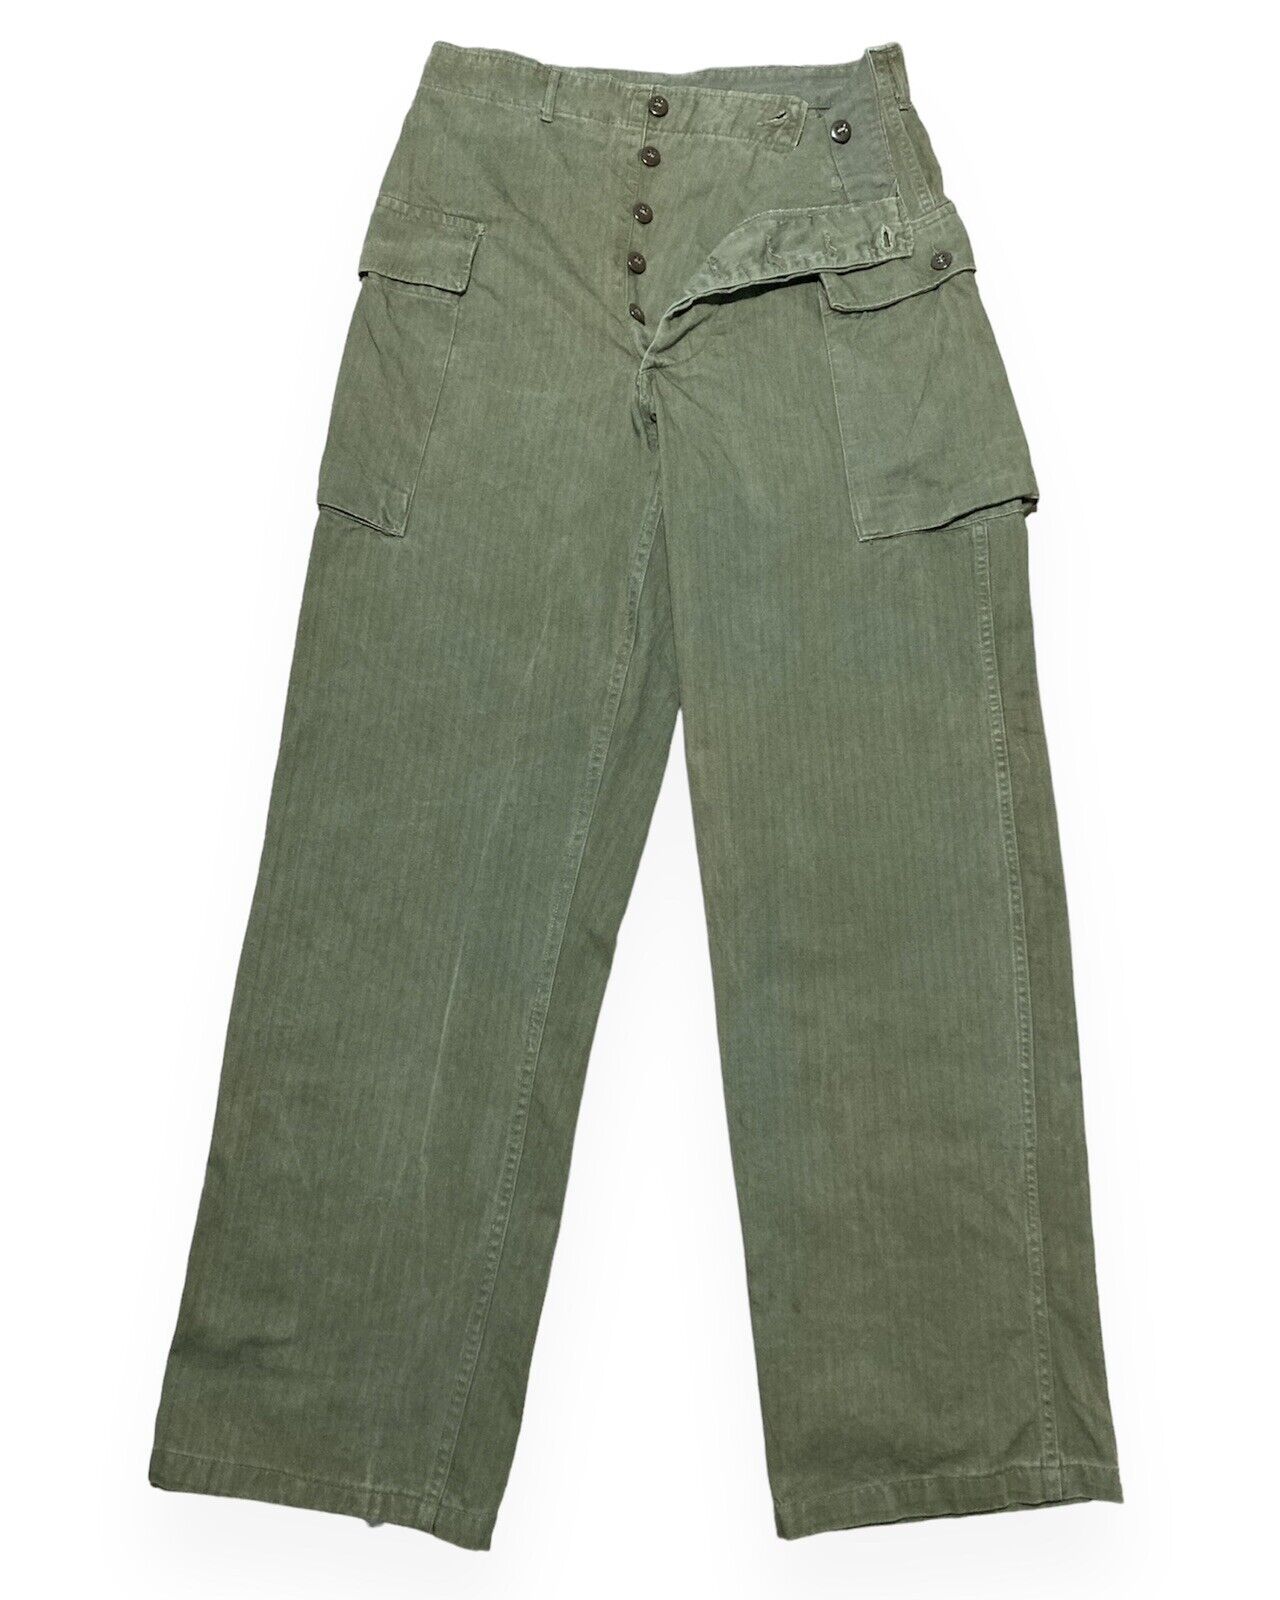 WWII WW2 US Army HBT High Cargo Trousers Pants 32x33 1944 Two Pocket Herringbone